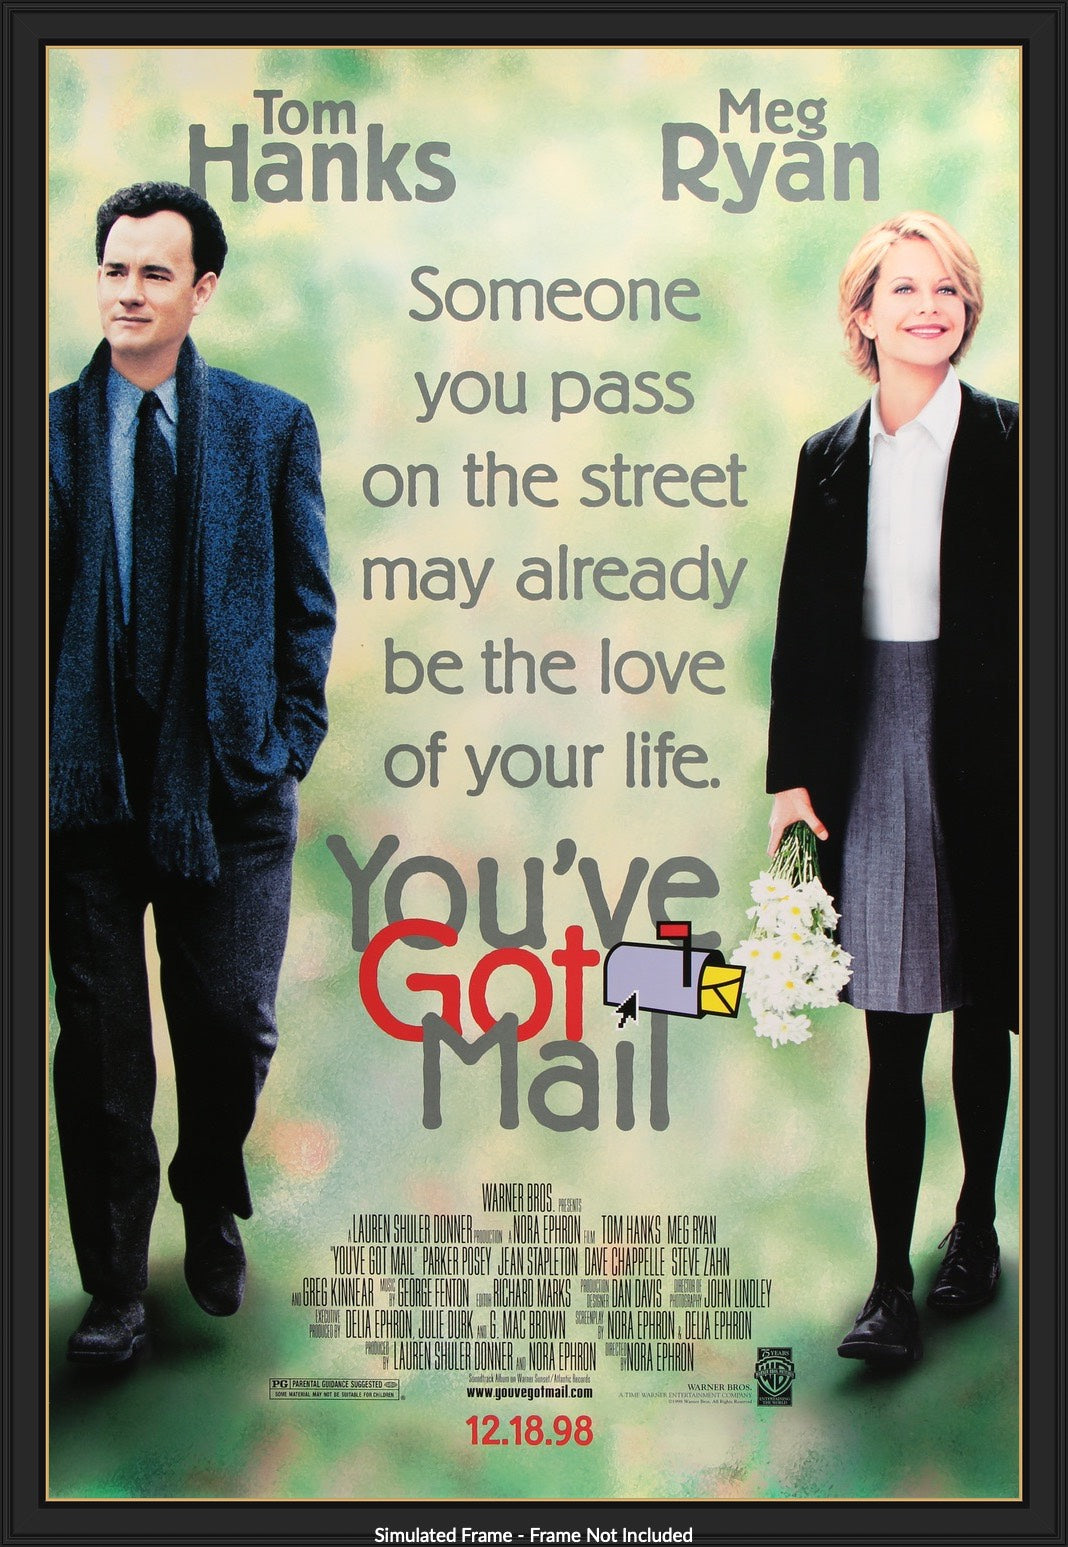 You've Got Mail (1998) original movie poster for sale at Original Film Art